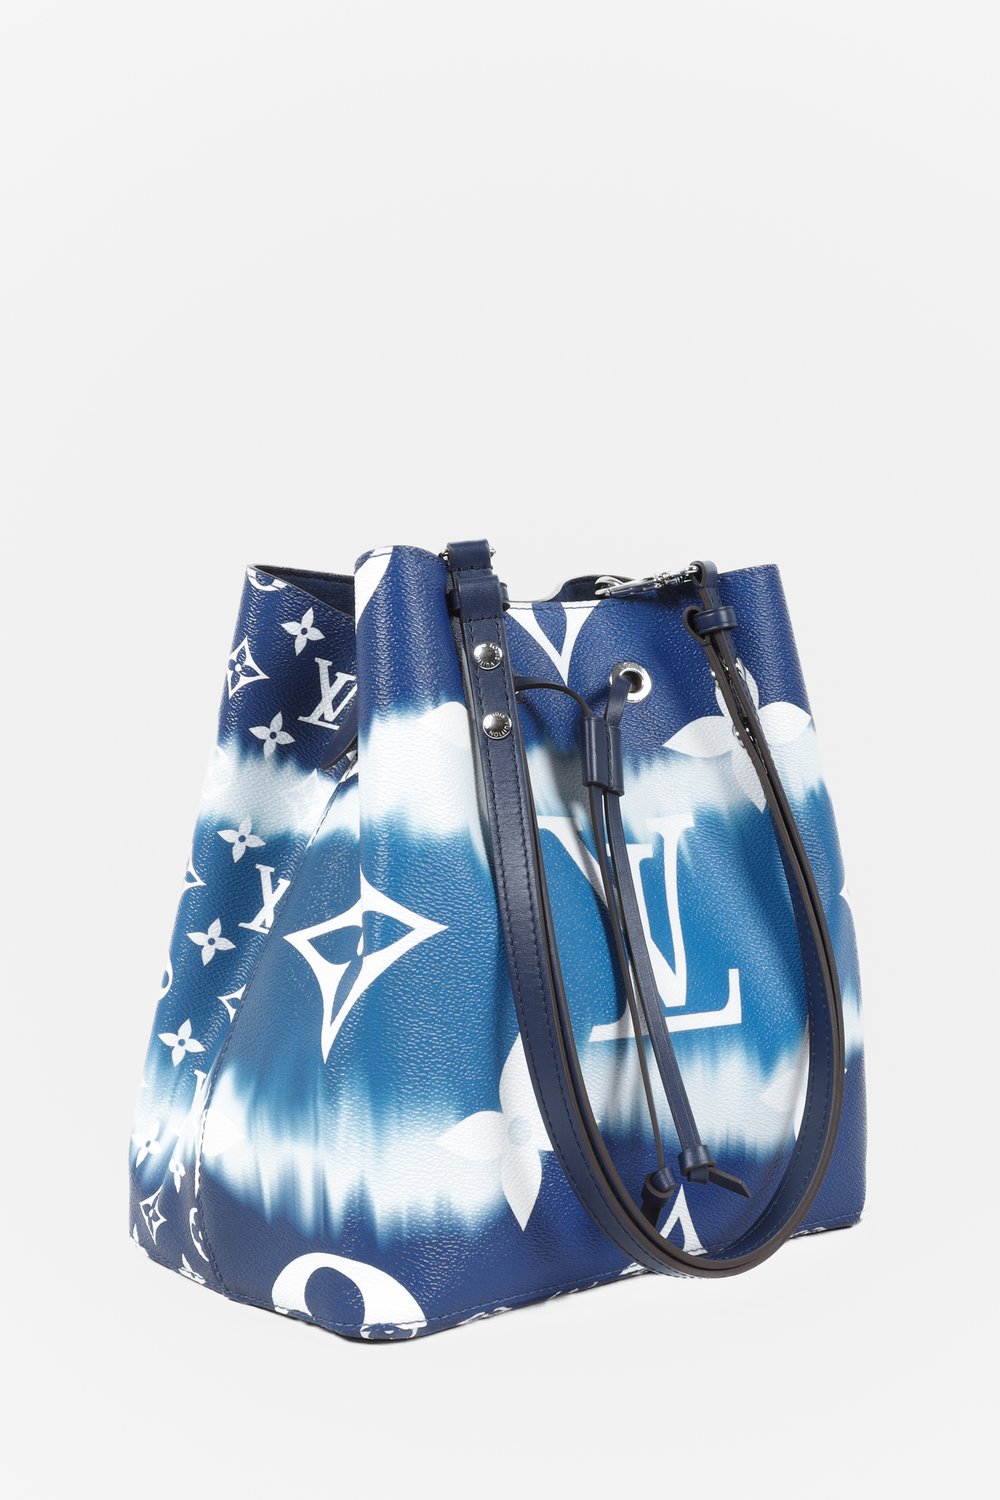 LOUIS VUITTON Escale Neonoe mm Blue Tie-Dye Monogram Bag